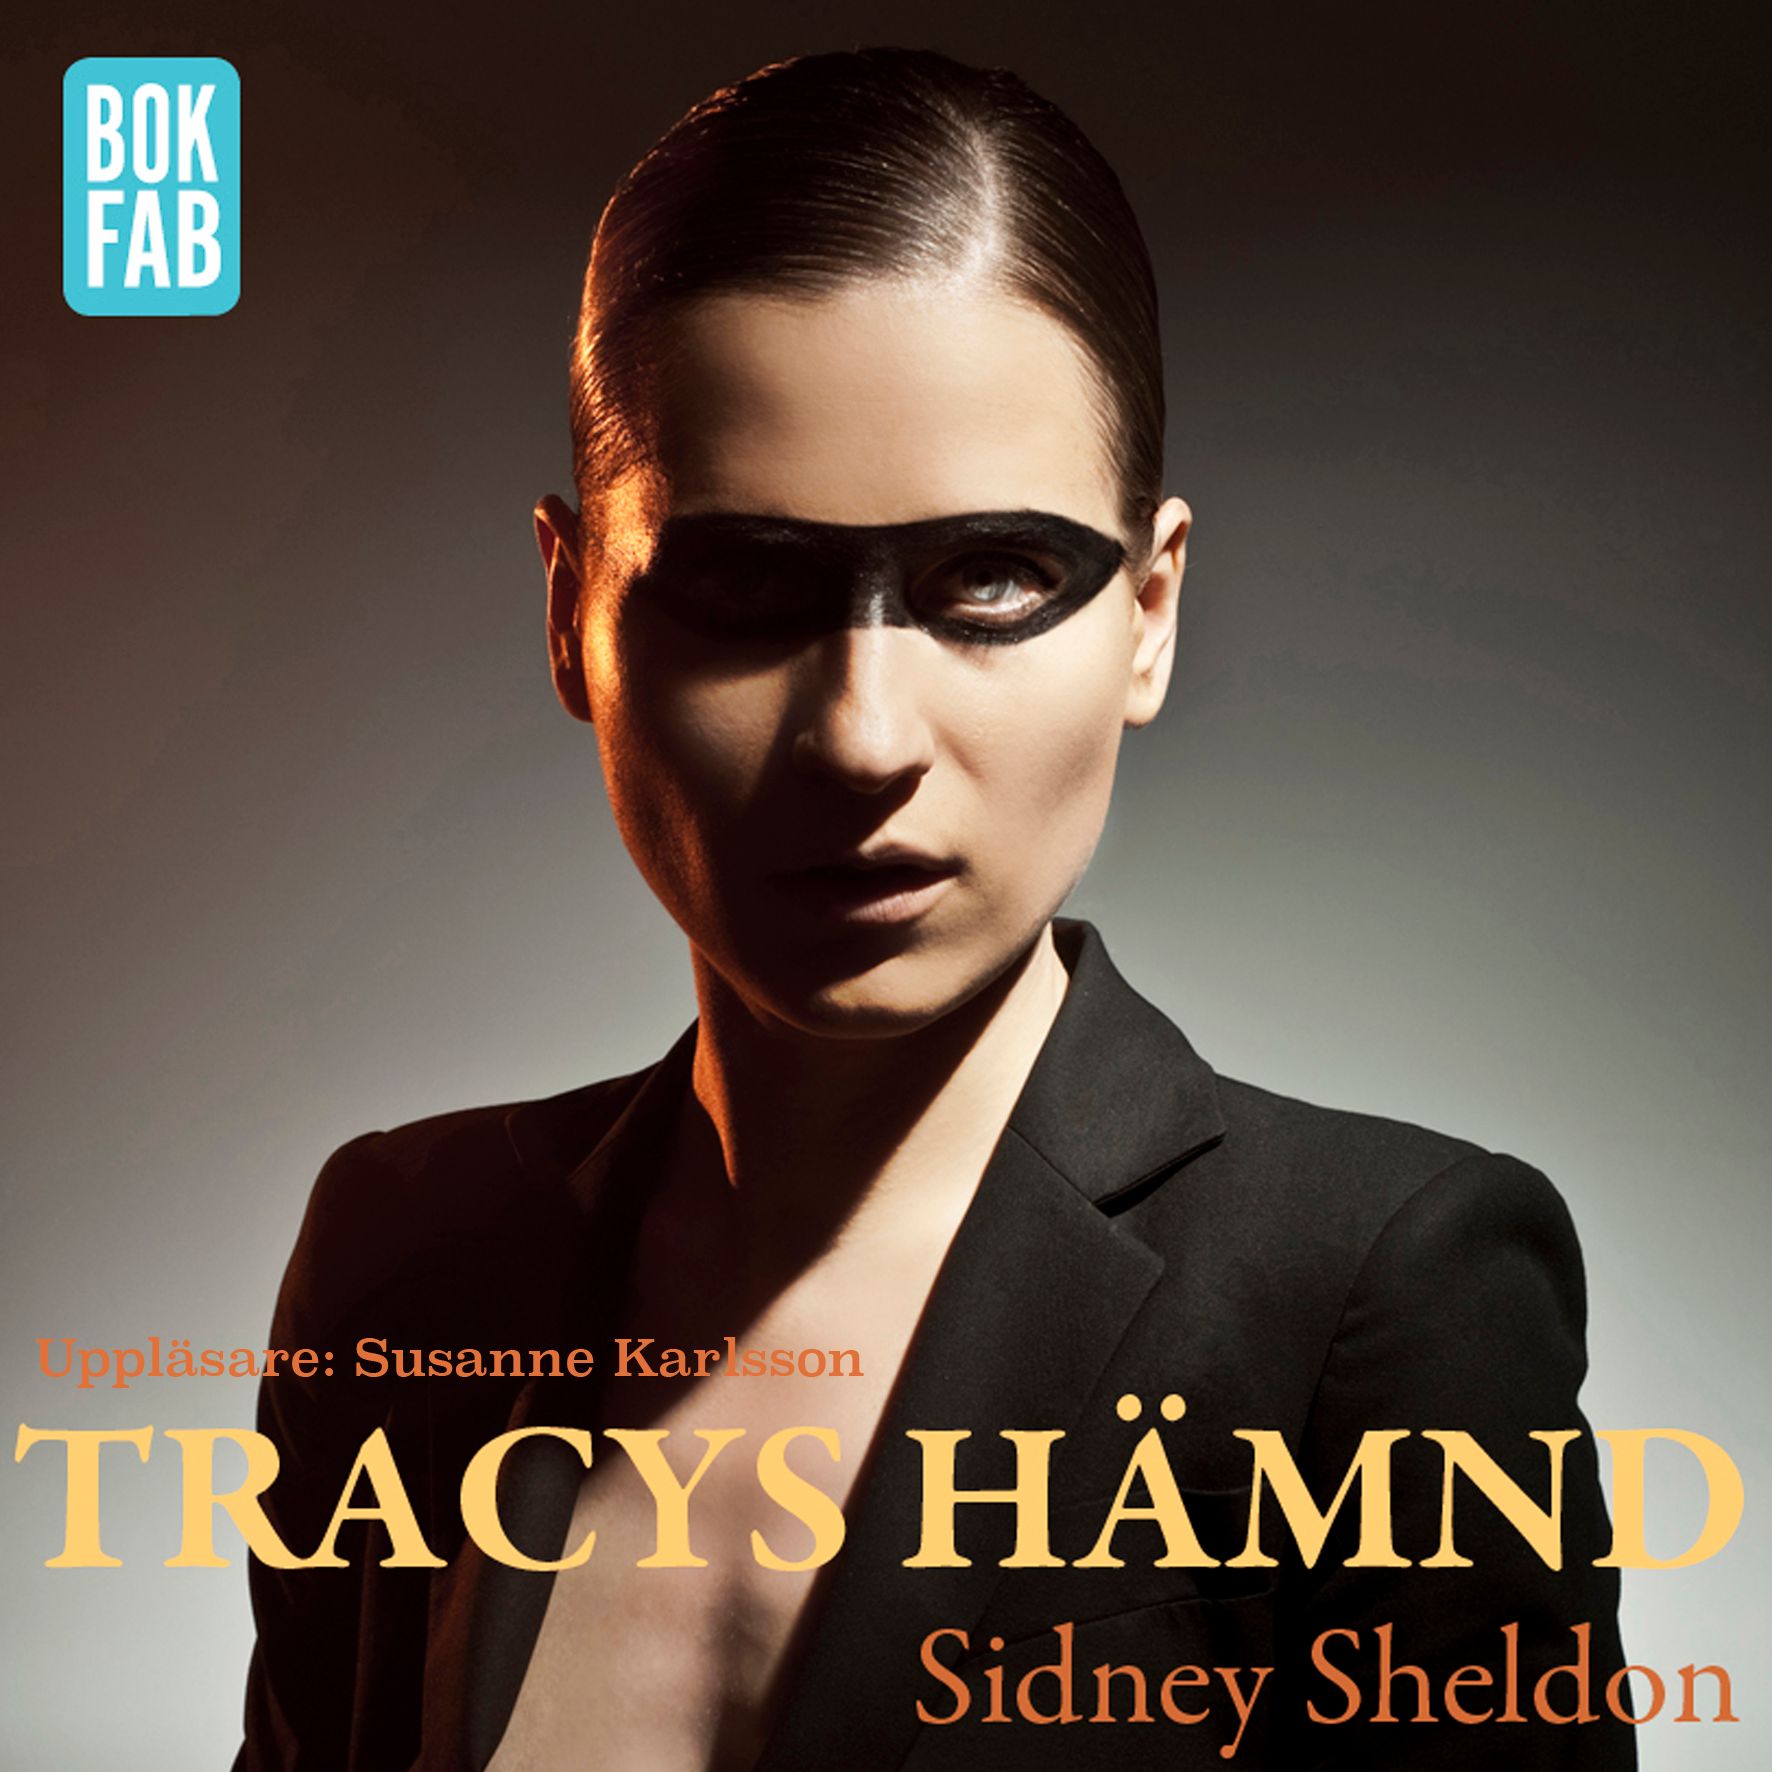 Tracys hämnd, audiobook by Sidney Sheldon